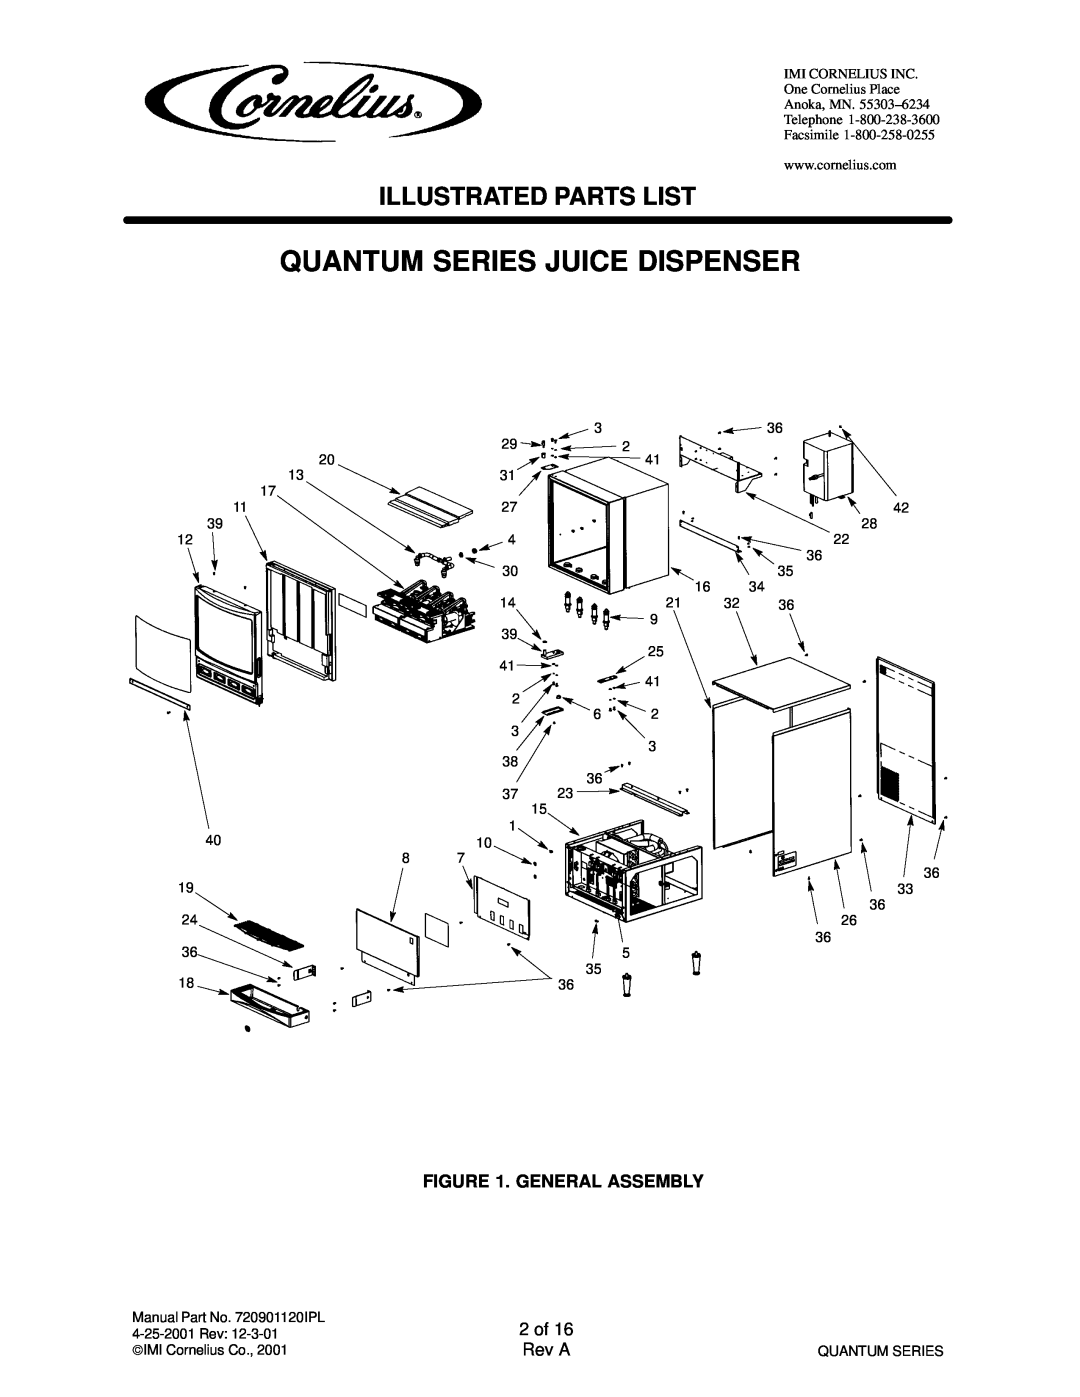 Panasonic 45400002, 45200103 manual Quantum Series Juice Dispenser, Illustrated Parts List, General Assembly, 2 of, Rev A 